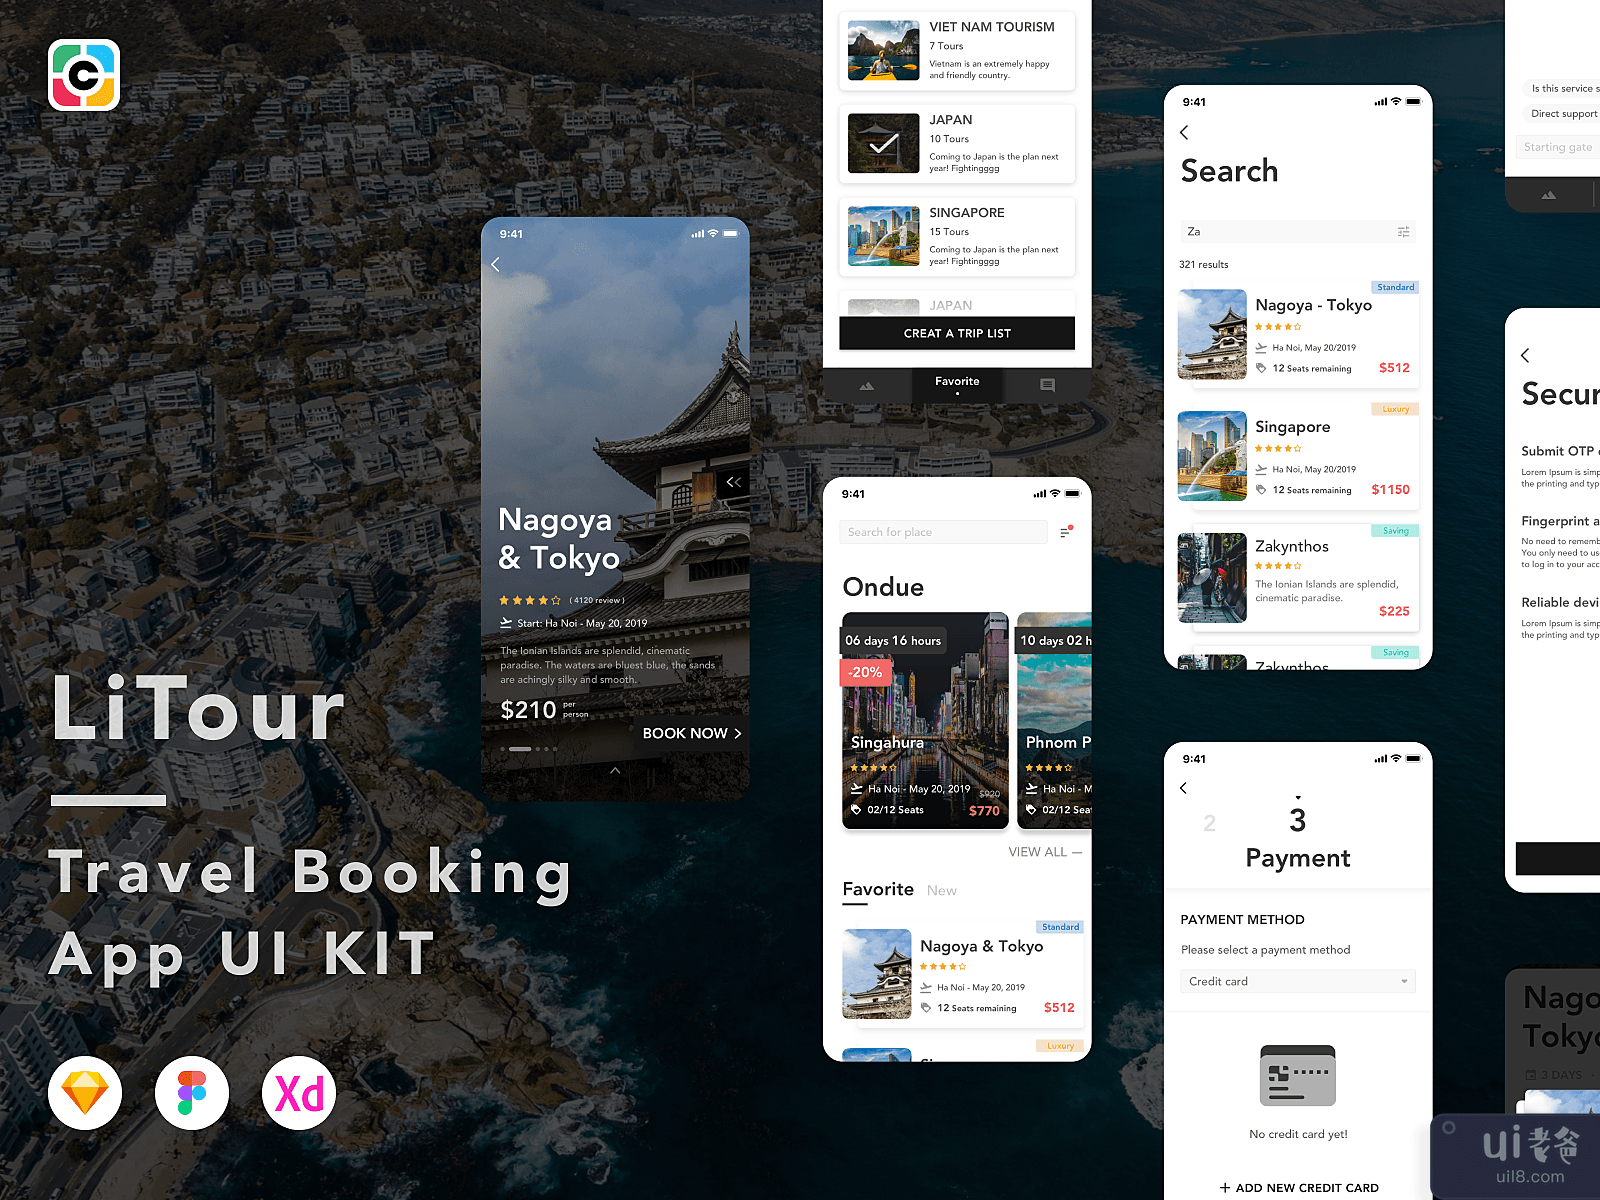 LiTour - Travel Booking App UI Kit #6